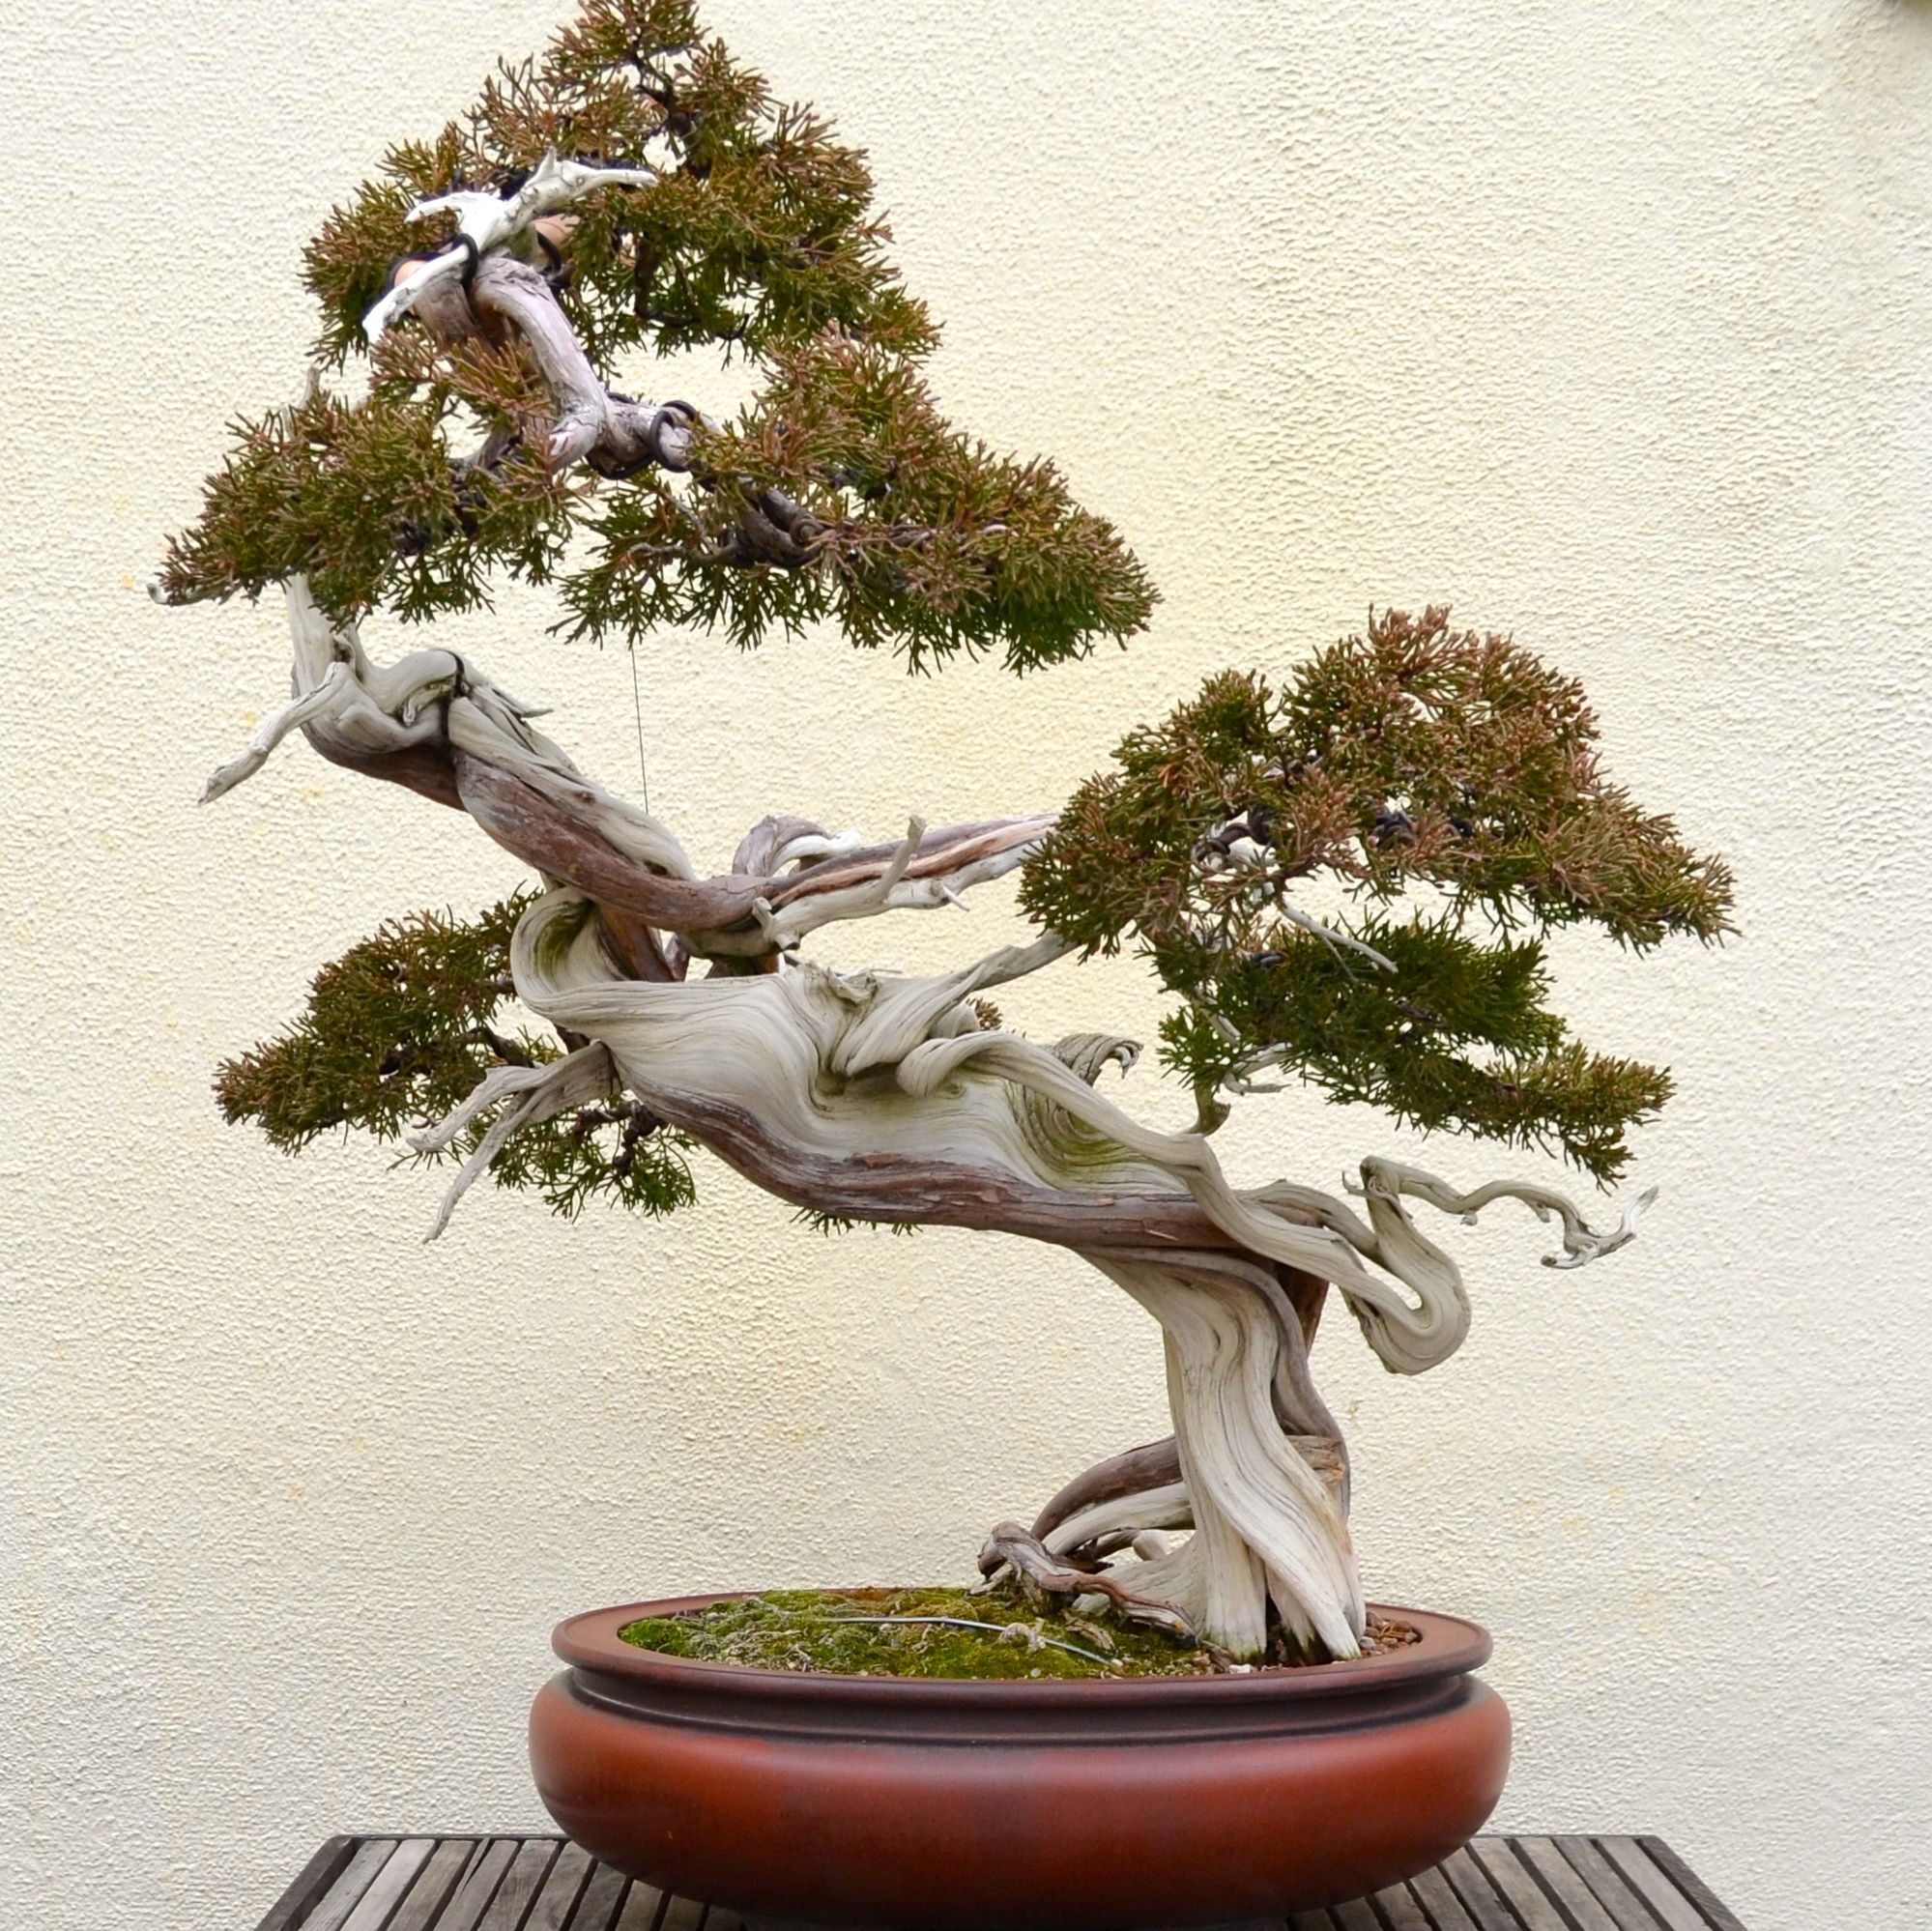 chinese juniper bonsai tree - Google Search | trees | Pinterest ...